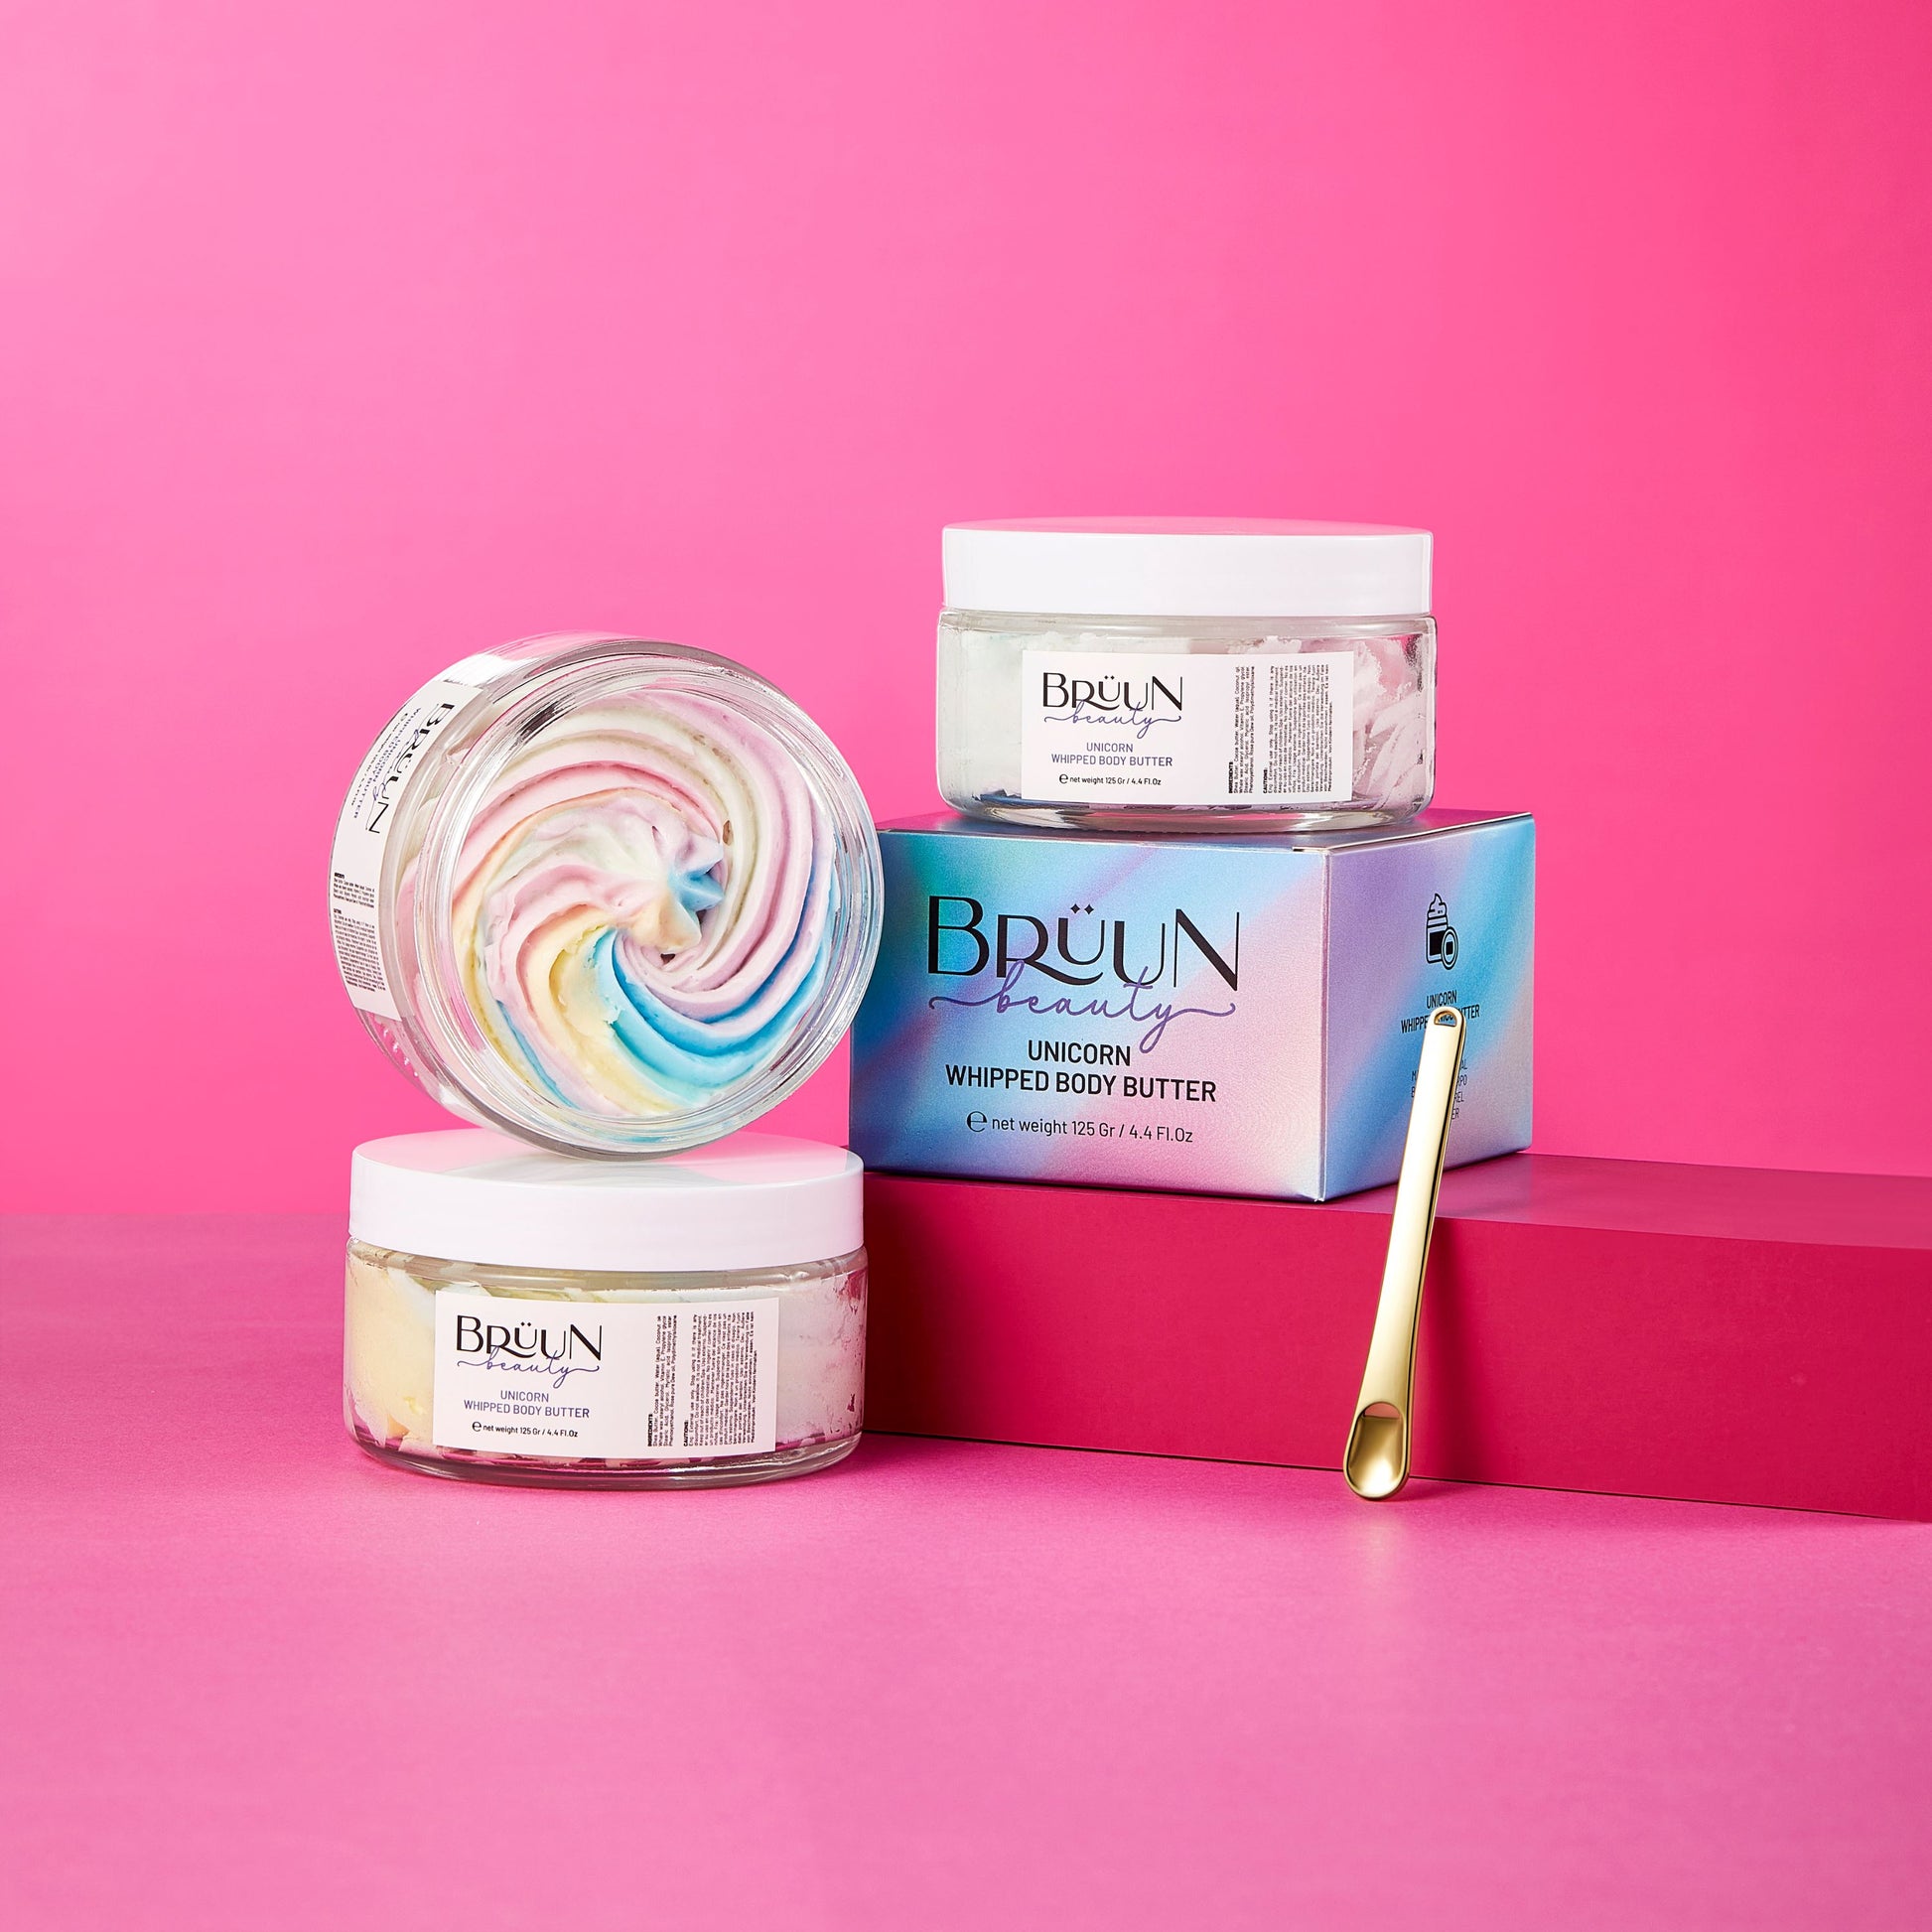 Unicorn Whipped Body Butter Cream – A 6 oz Organic Shea Butter Jar for Face & Body Skin Care with Jojoba Oil Bruun Beauty 